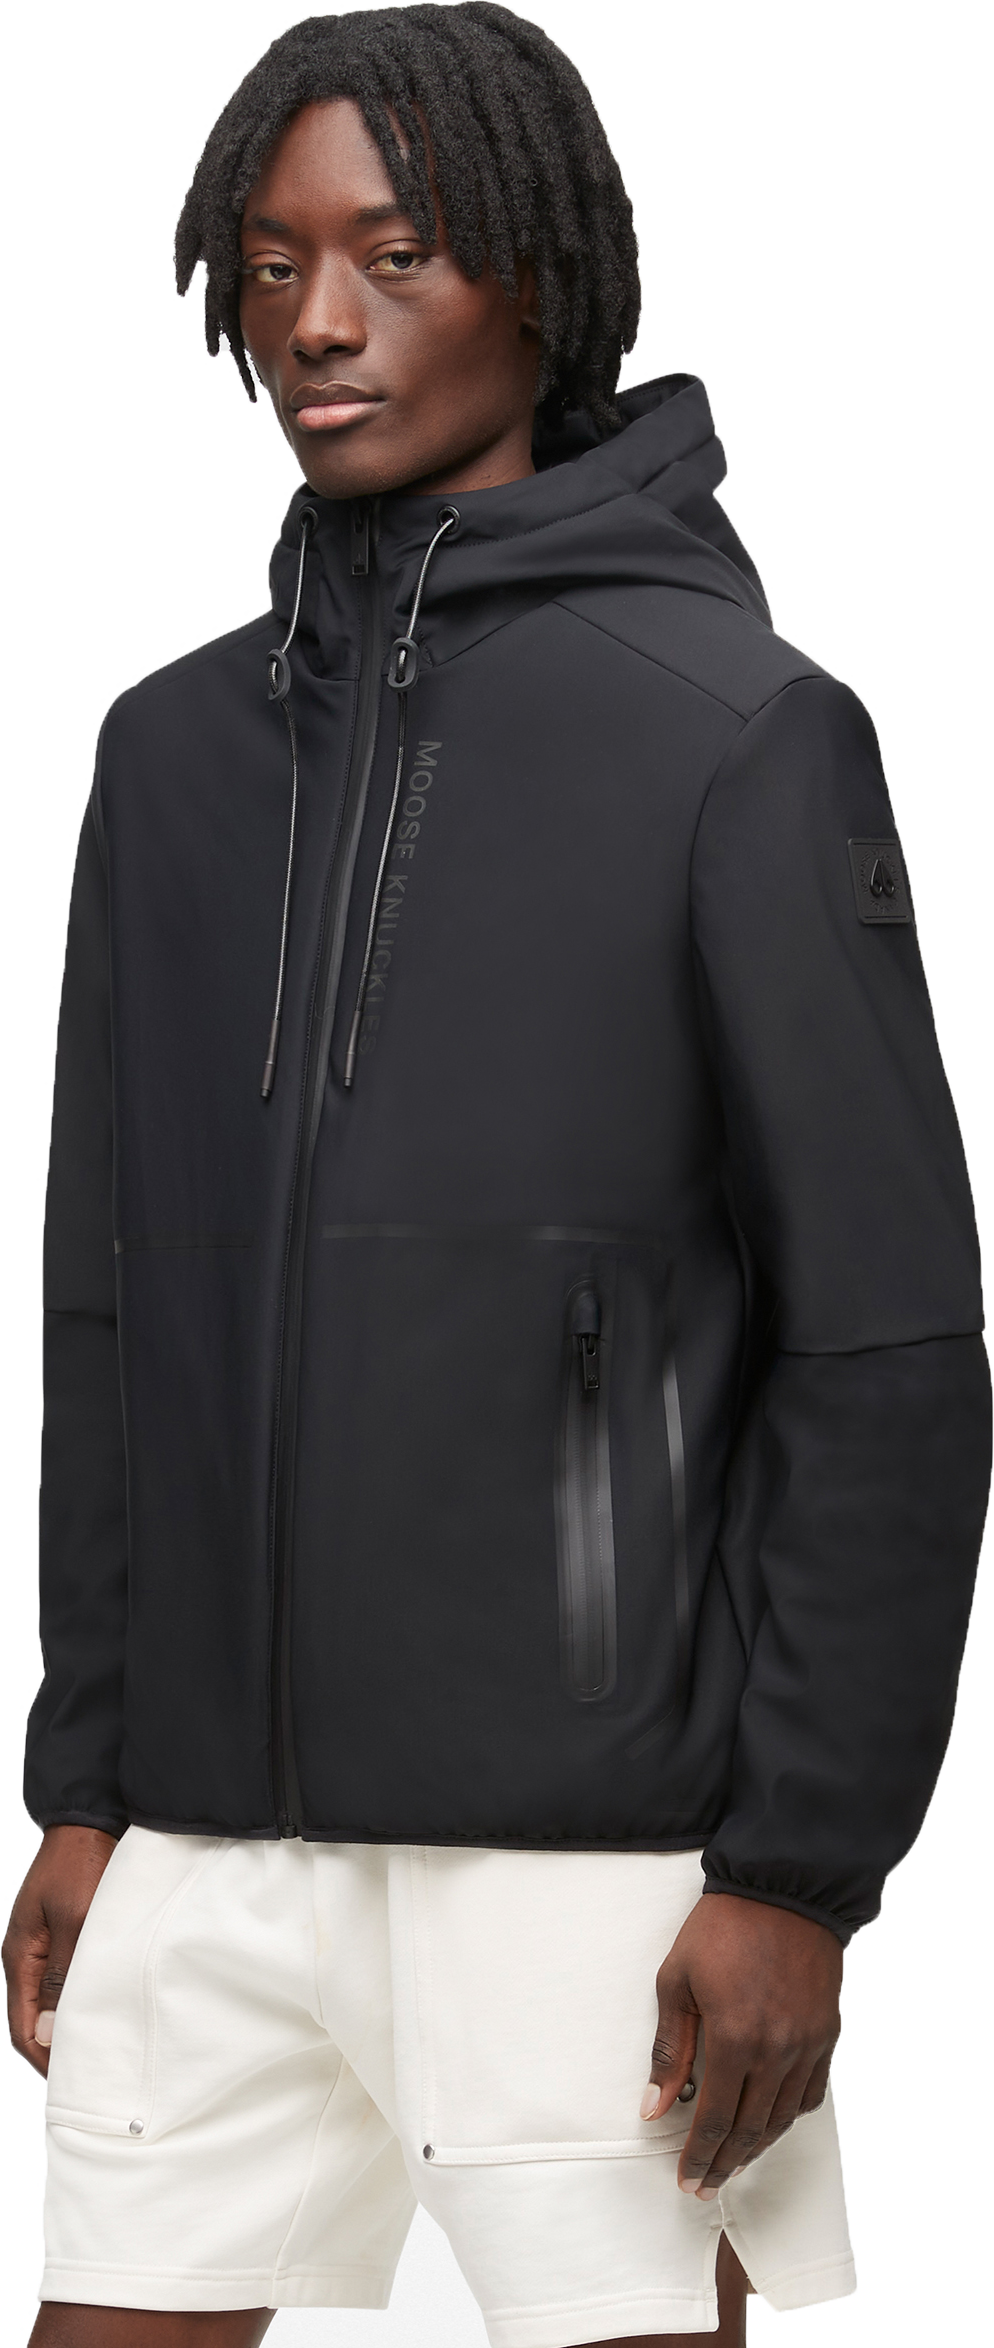 Grayton Jacket 2.0 Black